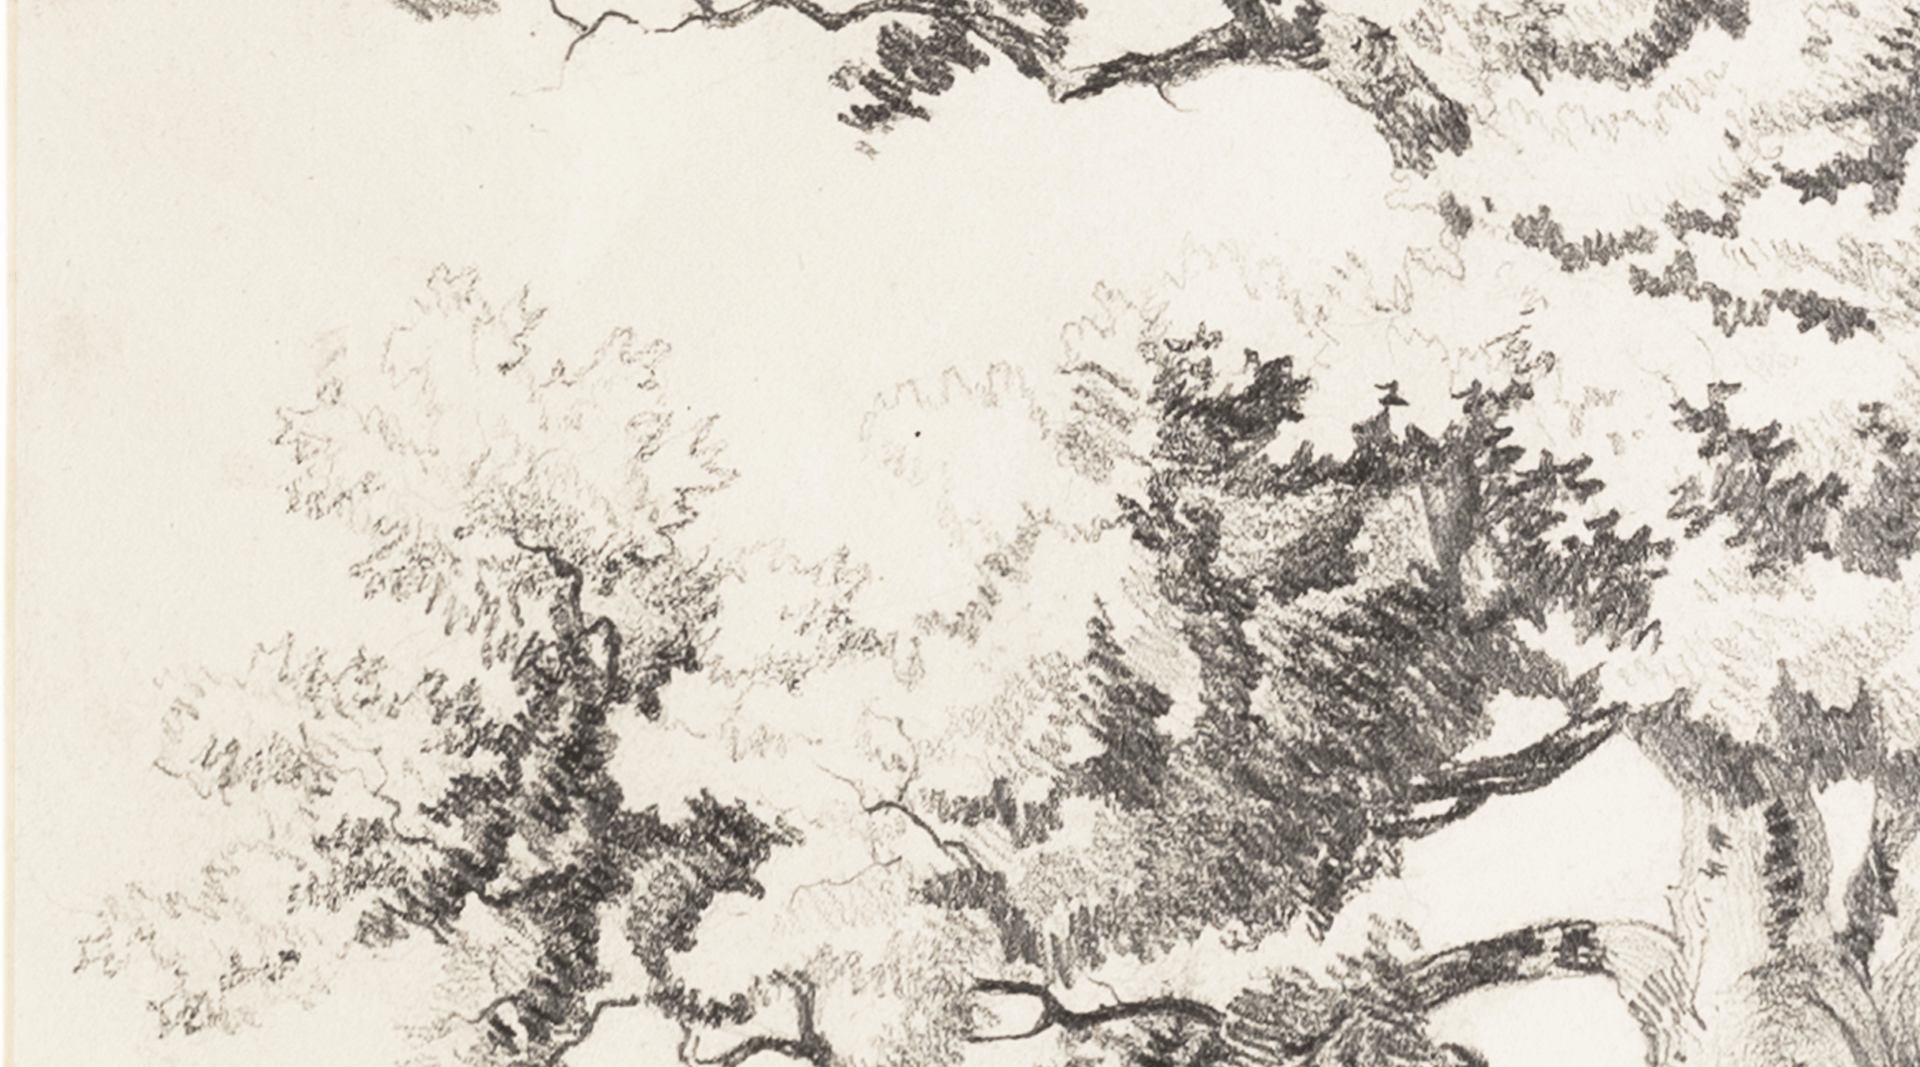 Close-up of mid-century pencil on paper illustration of mature tree